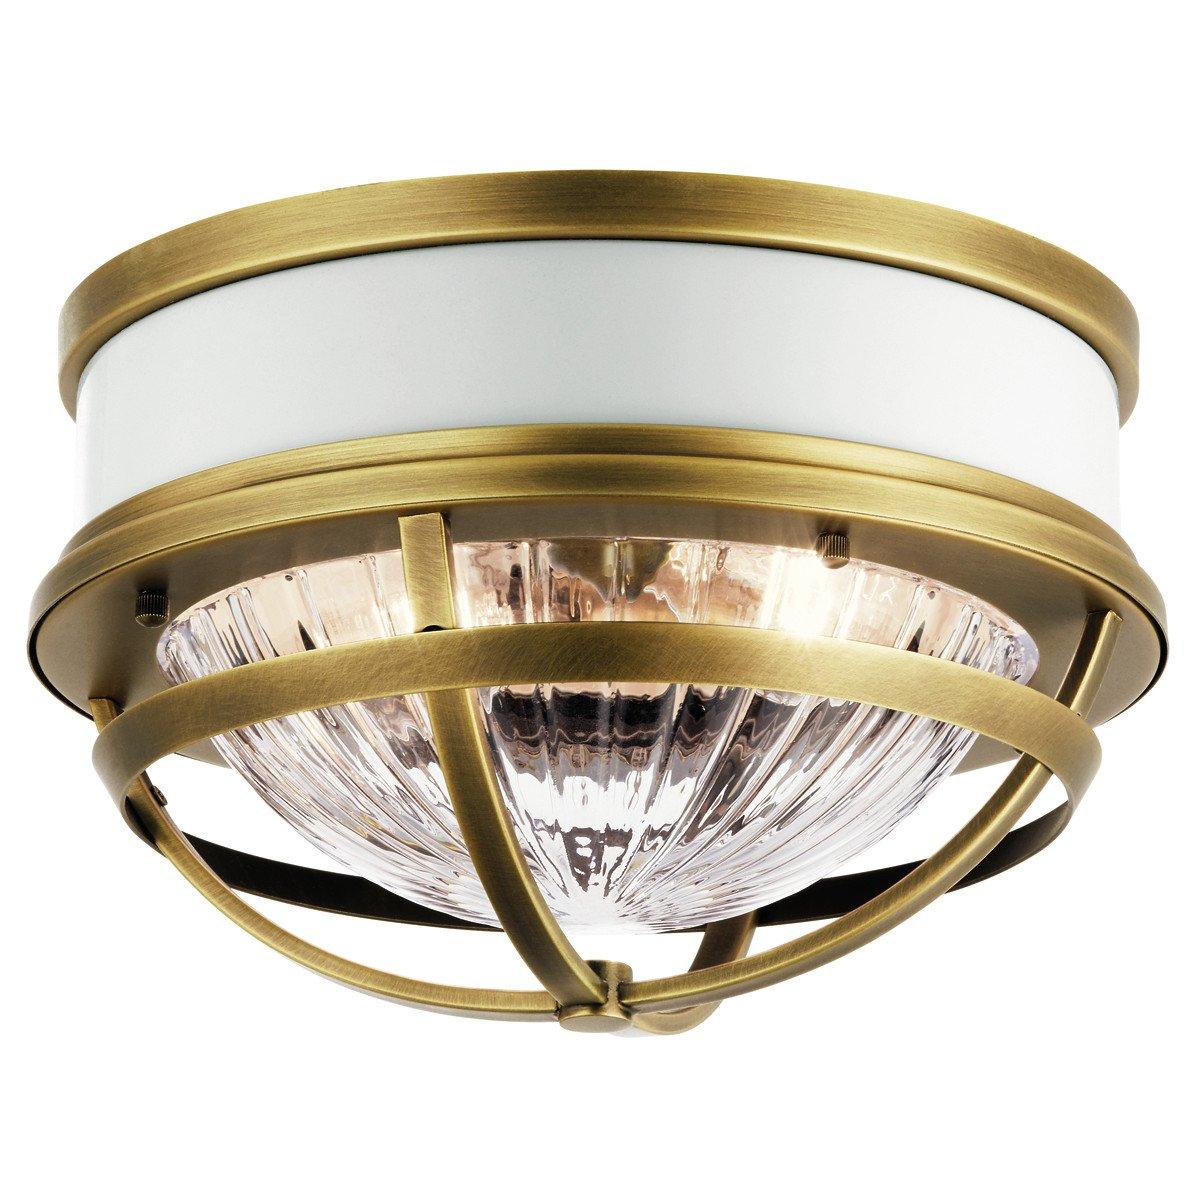 Kichler Tollis Bowl Semi Flush Ceiling Light Natural Brass & White